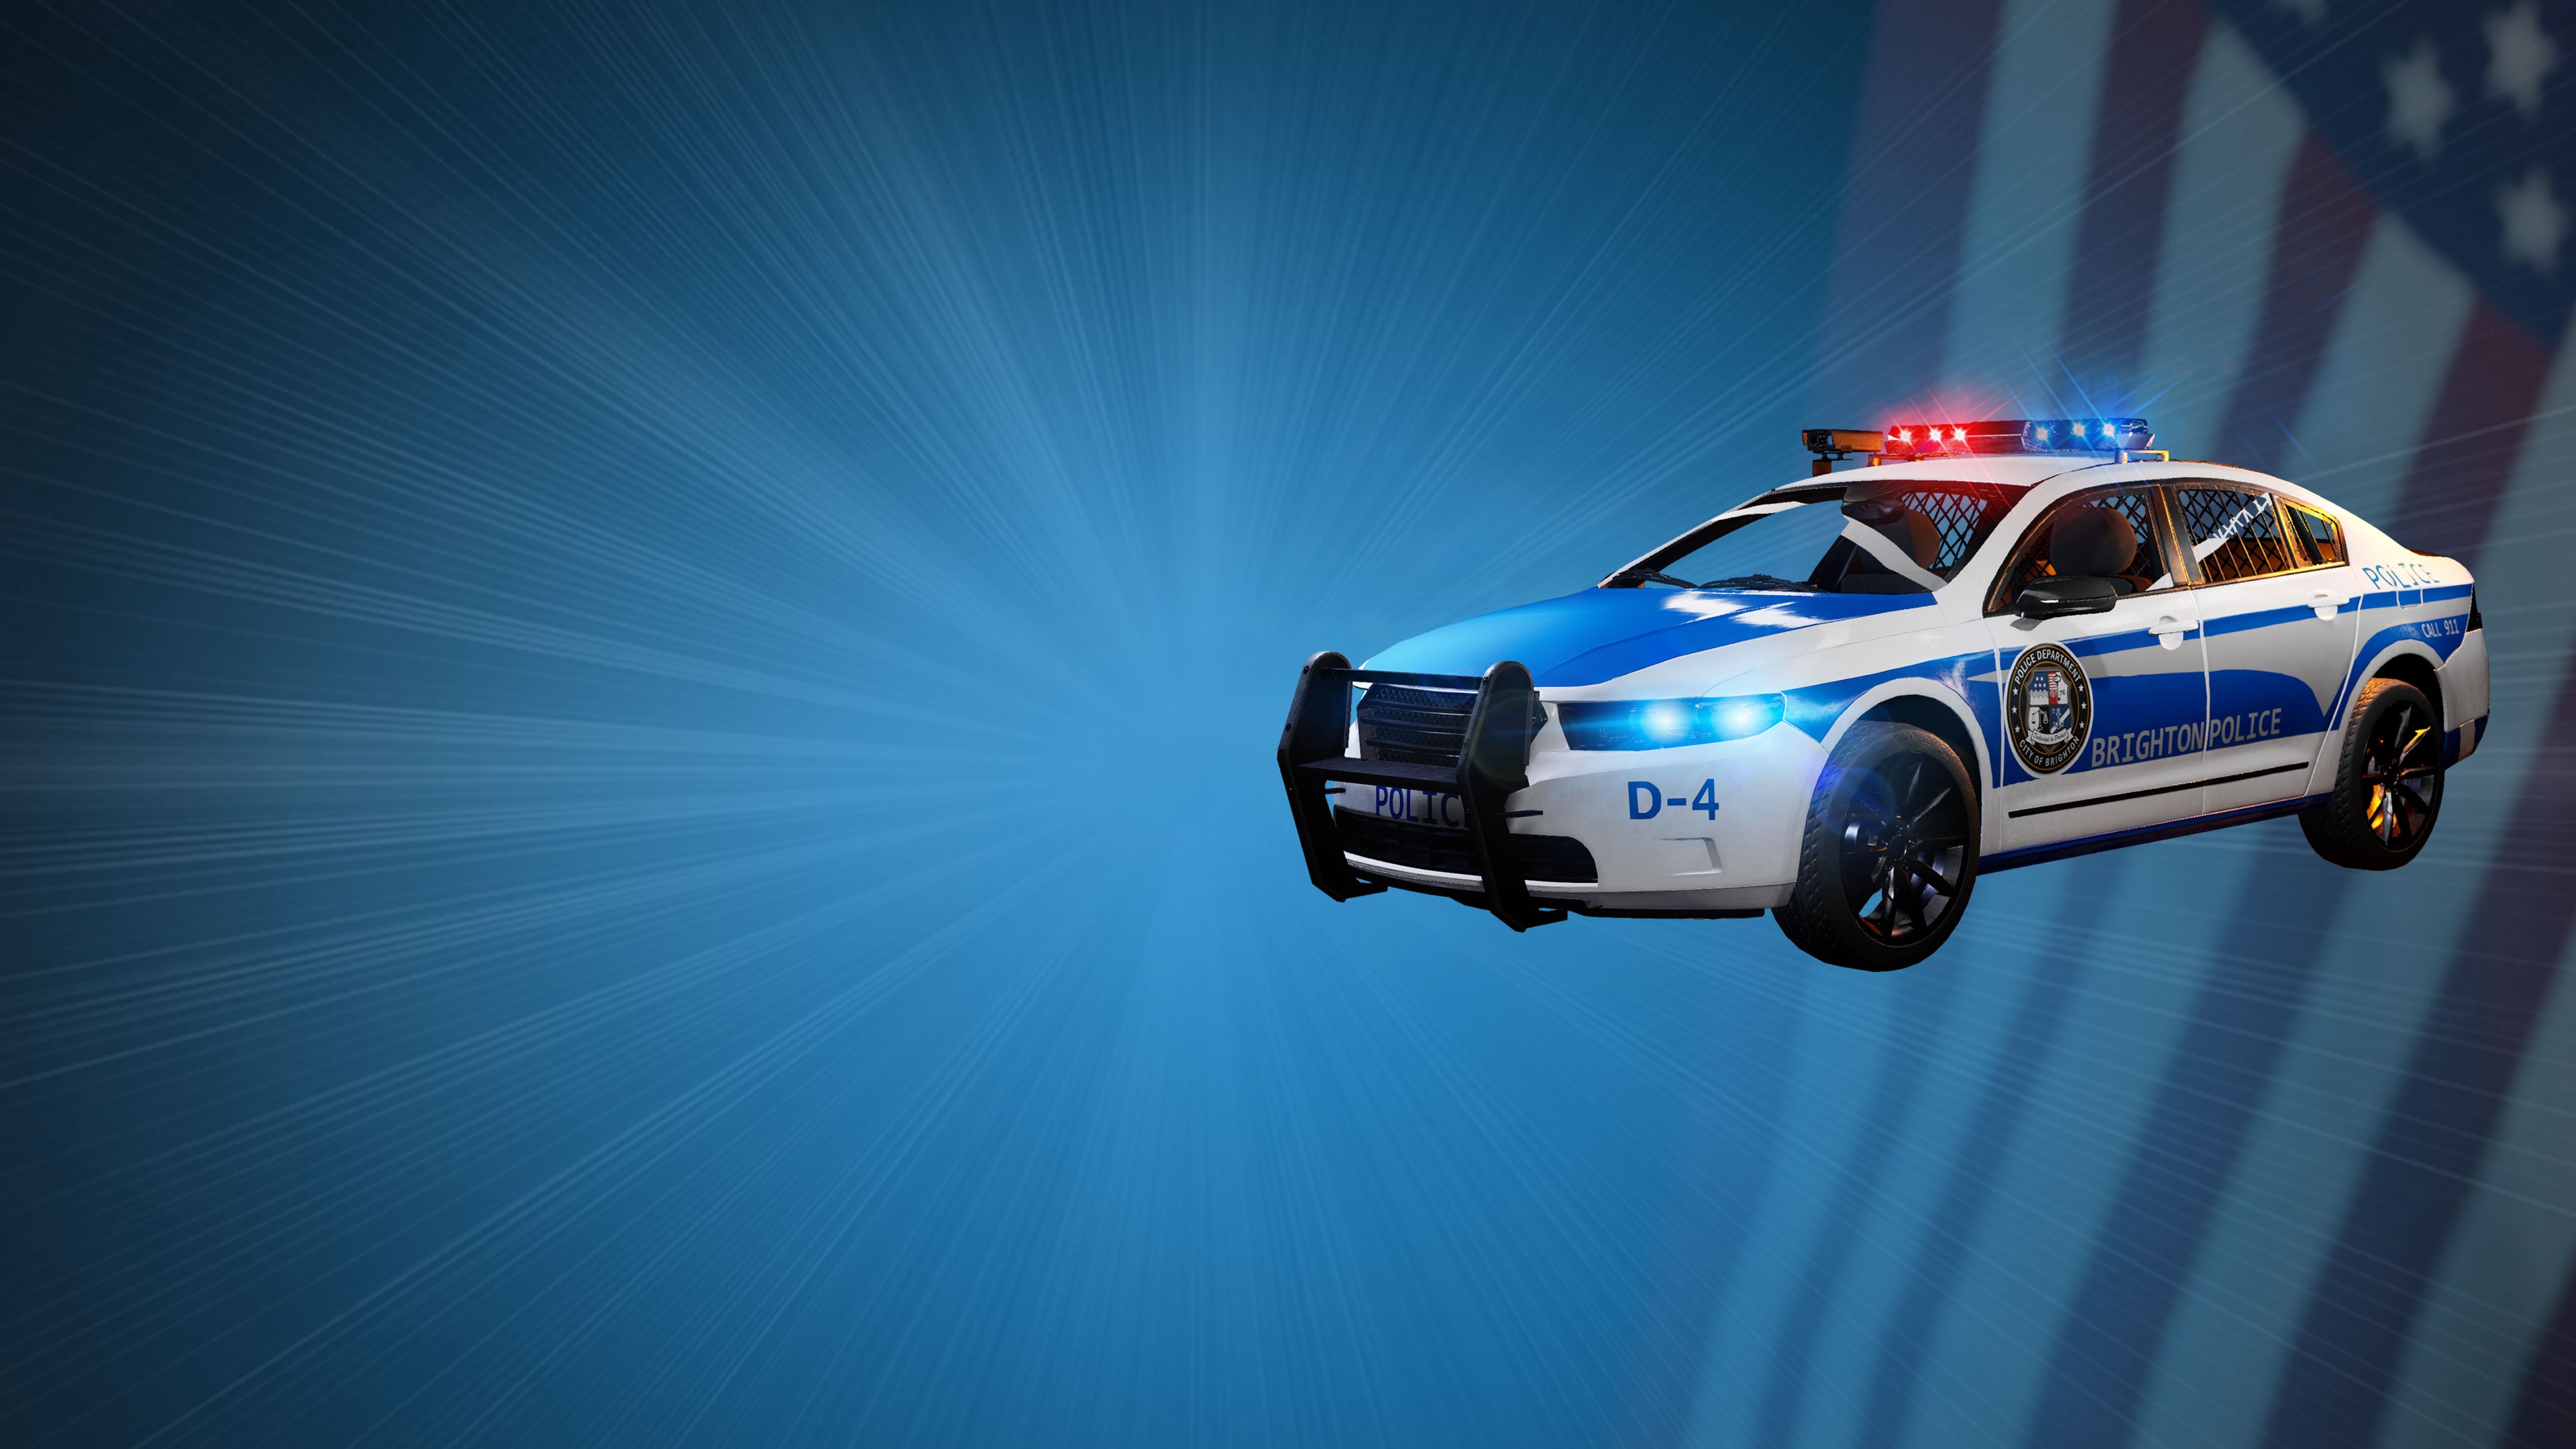 DLC Police Patrol Vehicle Surveillance Simulator: Officers: Police